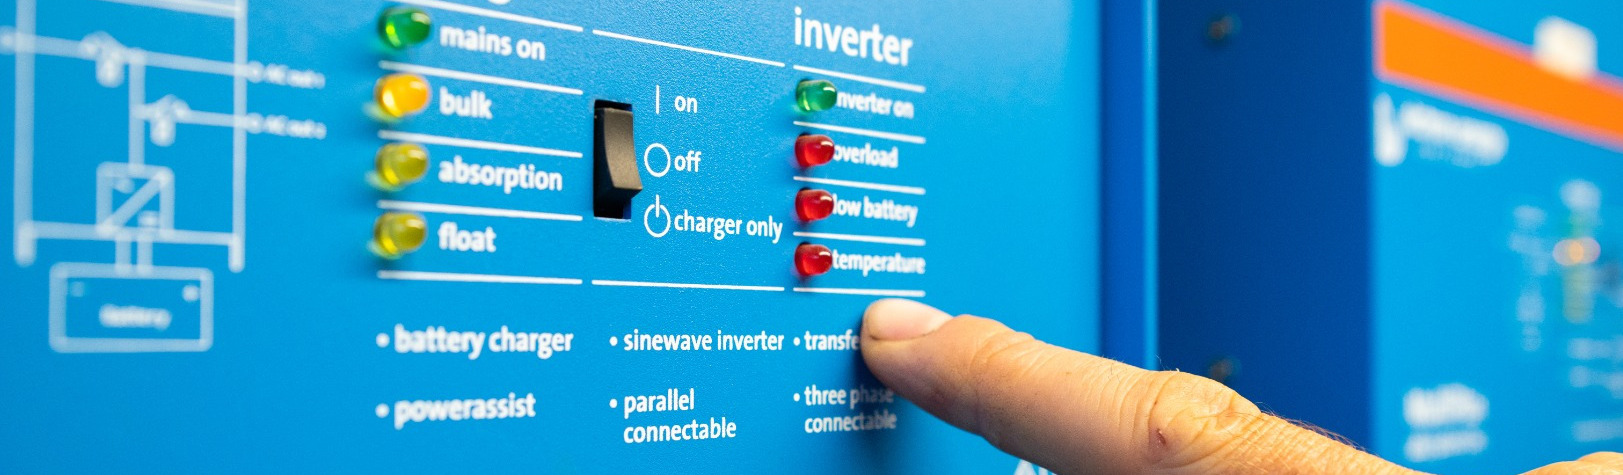 Solar Inverter control panel